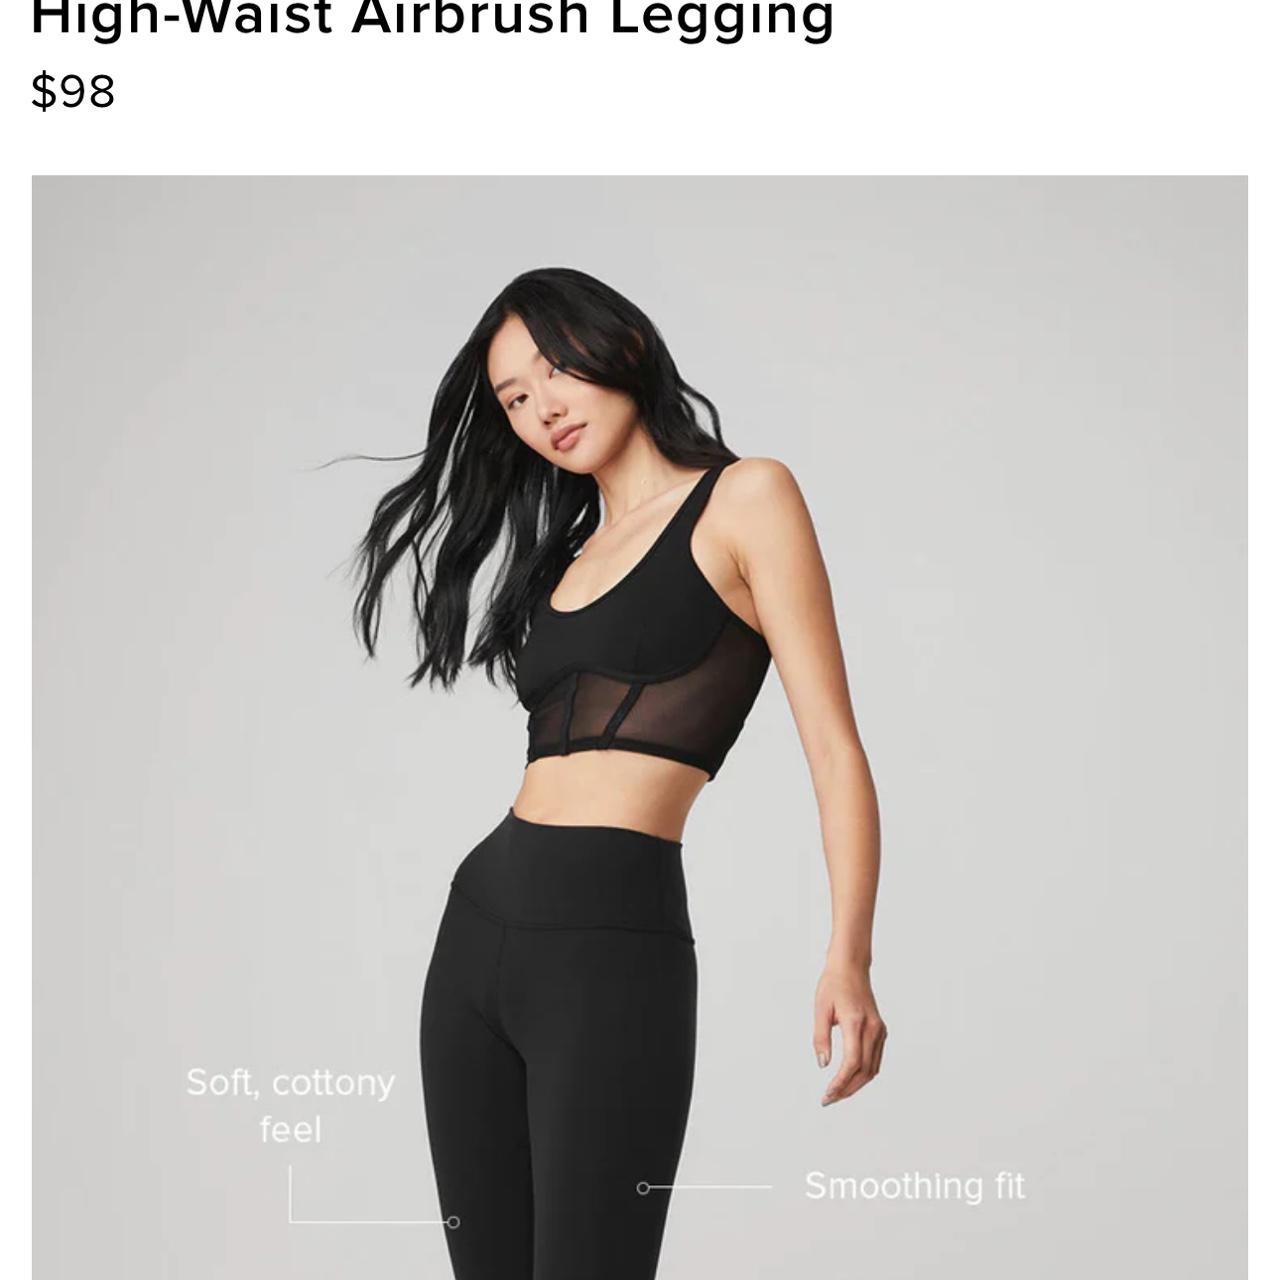 7/8 High-Waist Airbrush Legging By Alo